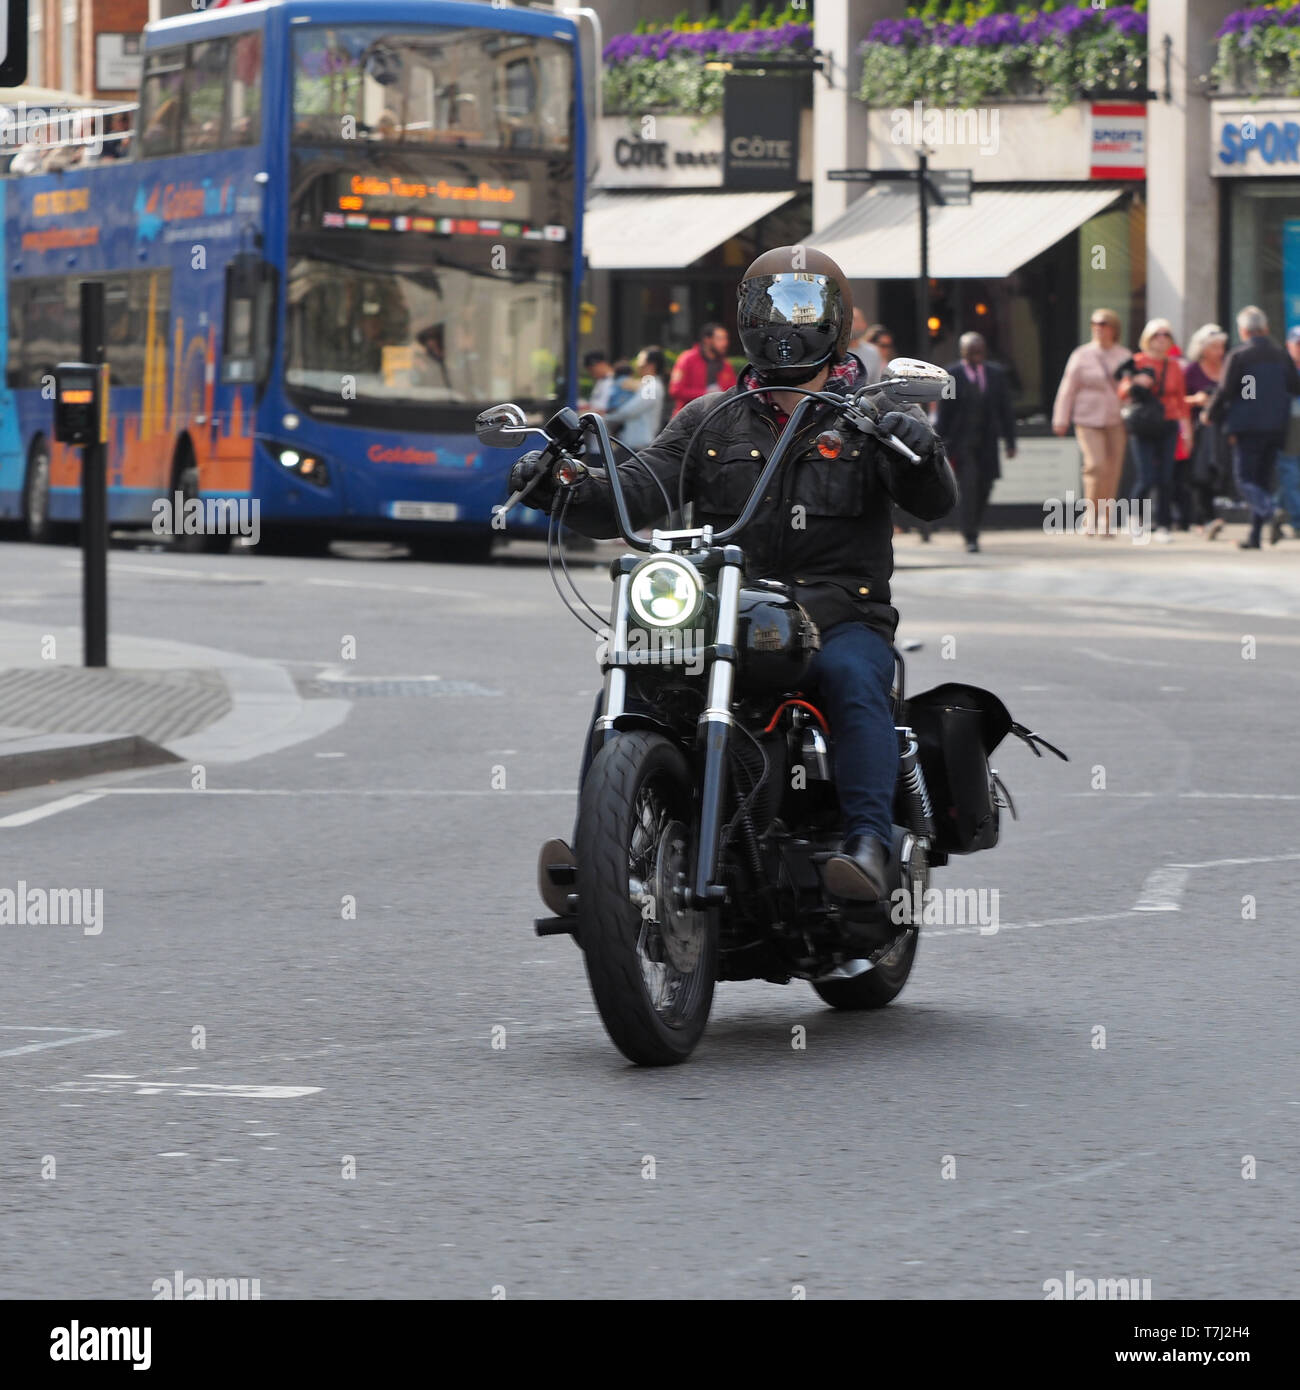 Montando una Harley Davidson motos chopper inCity de Londres, Inglaterra, Reino Unido. Foto de stock